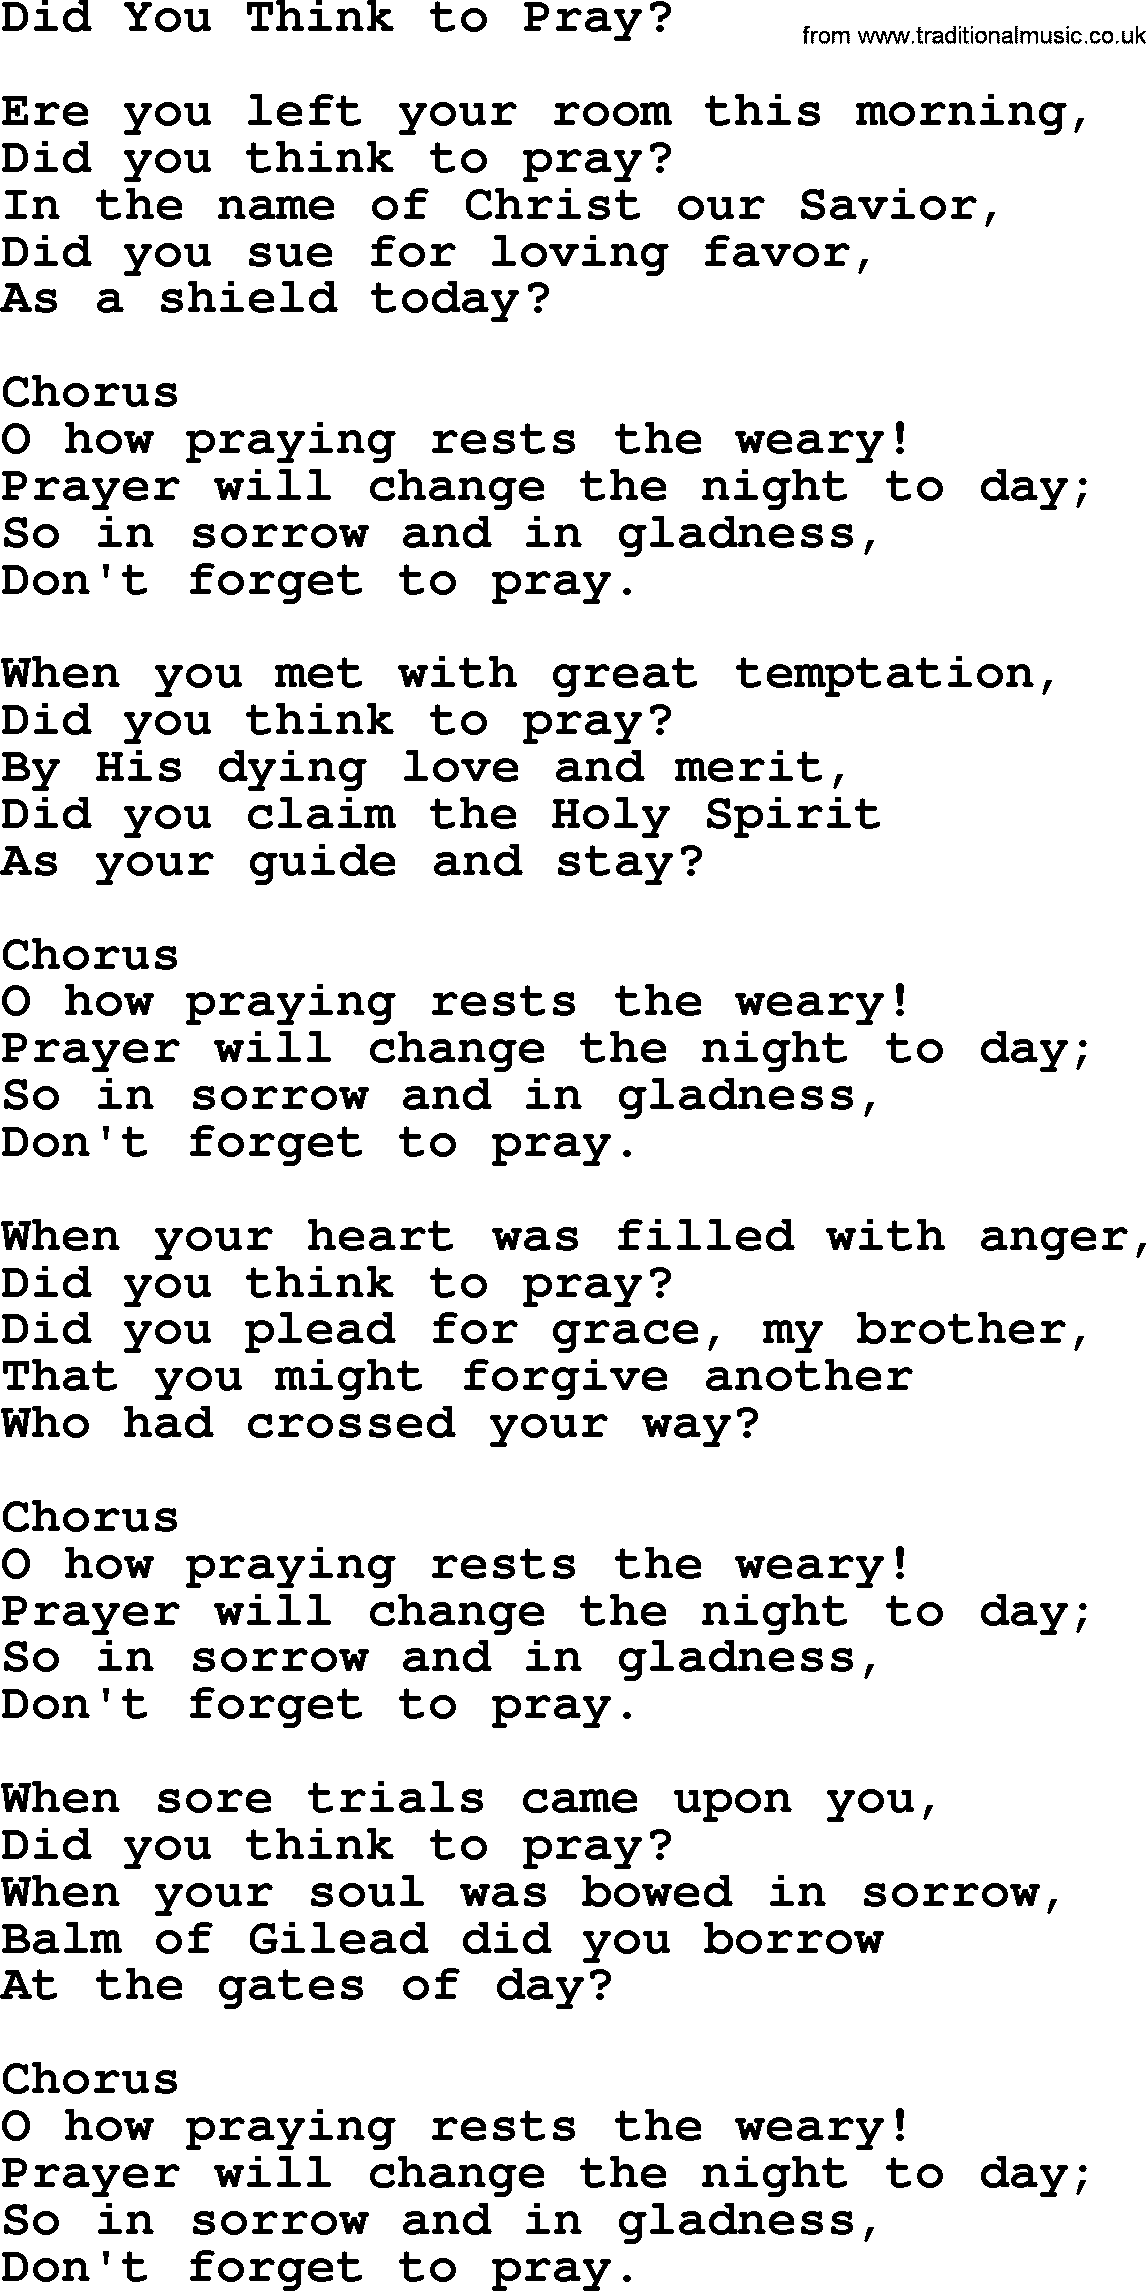 Baptist Hymnal Hymn: Did You Think To Pray, lyrics with pdf